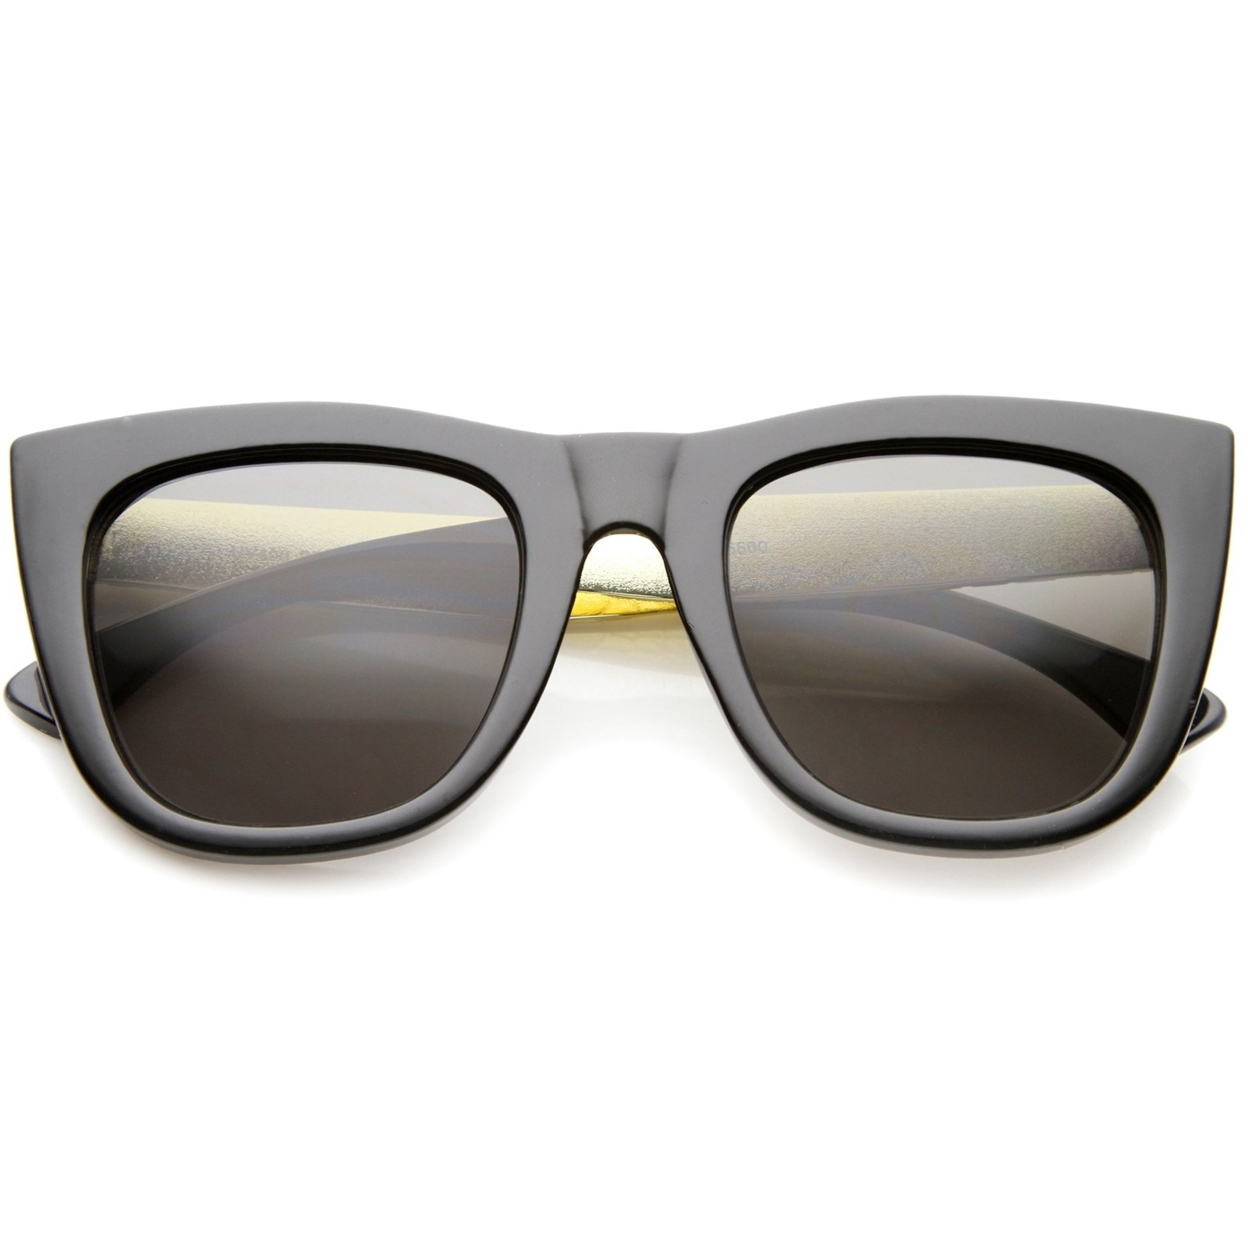 High Fashion Alligator Metal Temple Bold Rimmed Flat Top Sunglasses - Black-Silver / Smoke